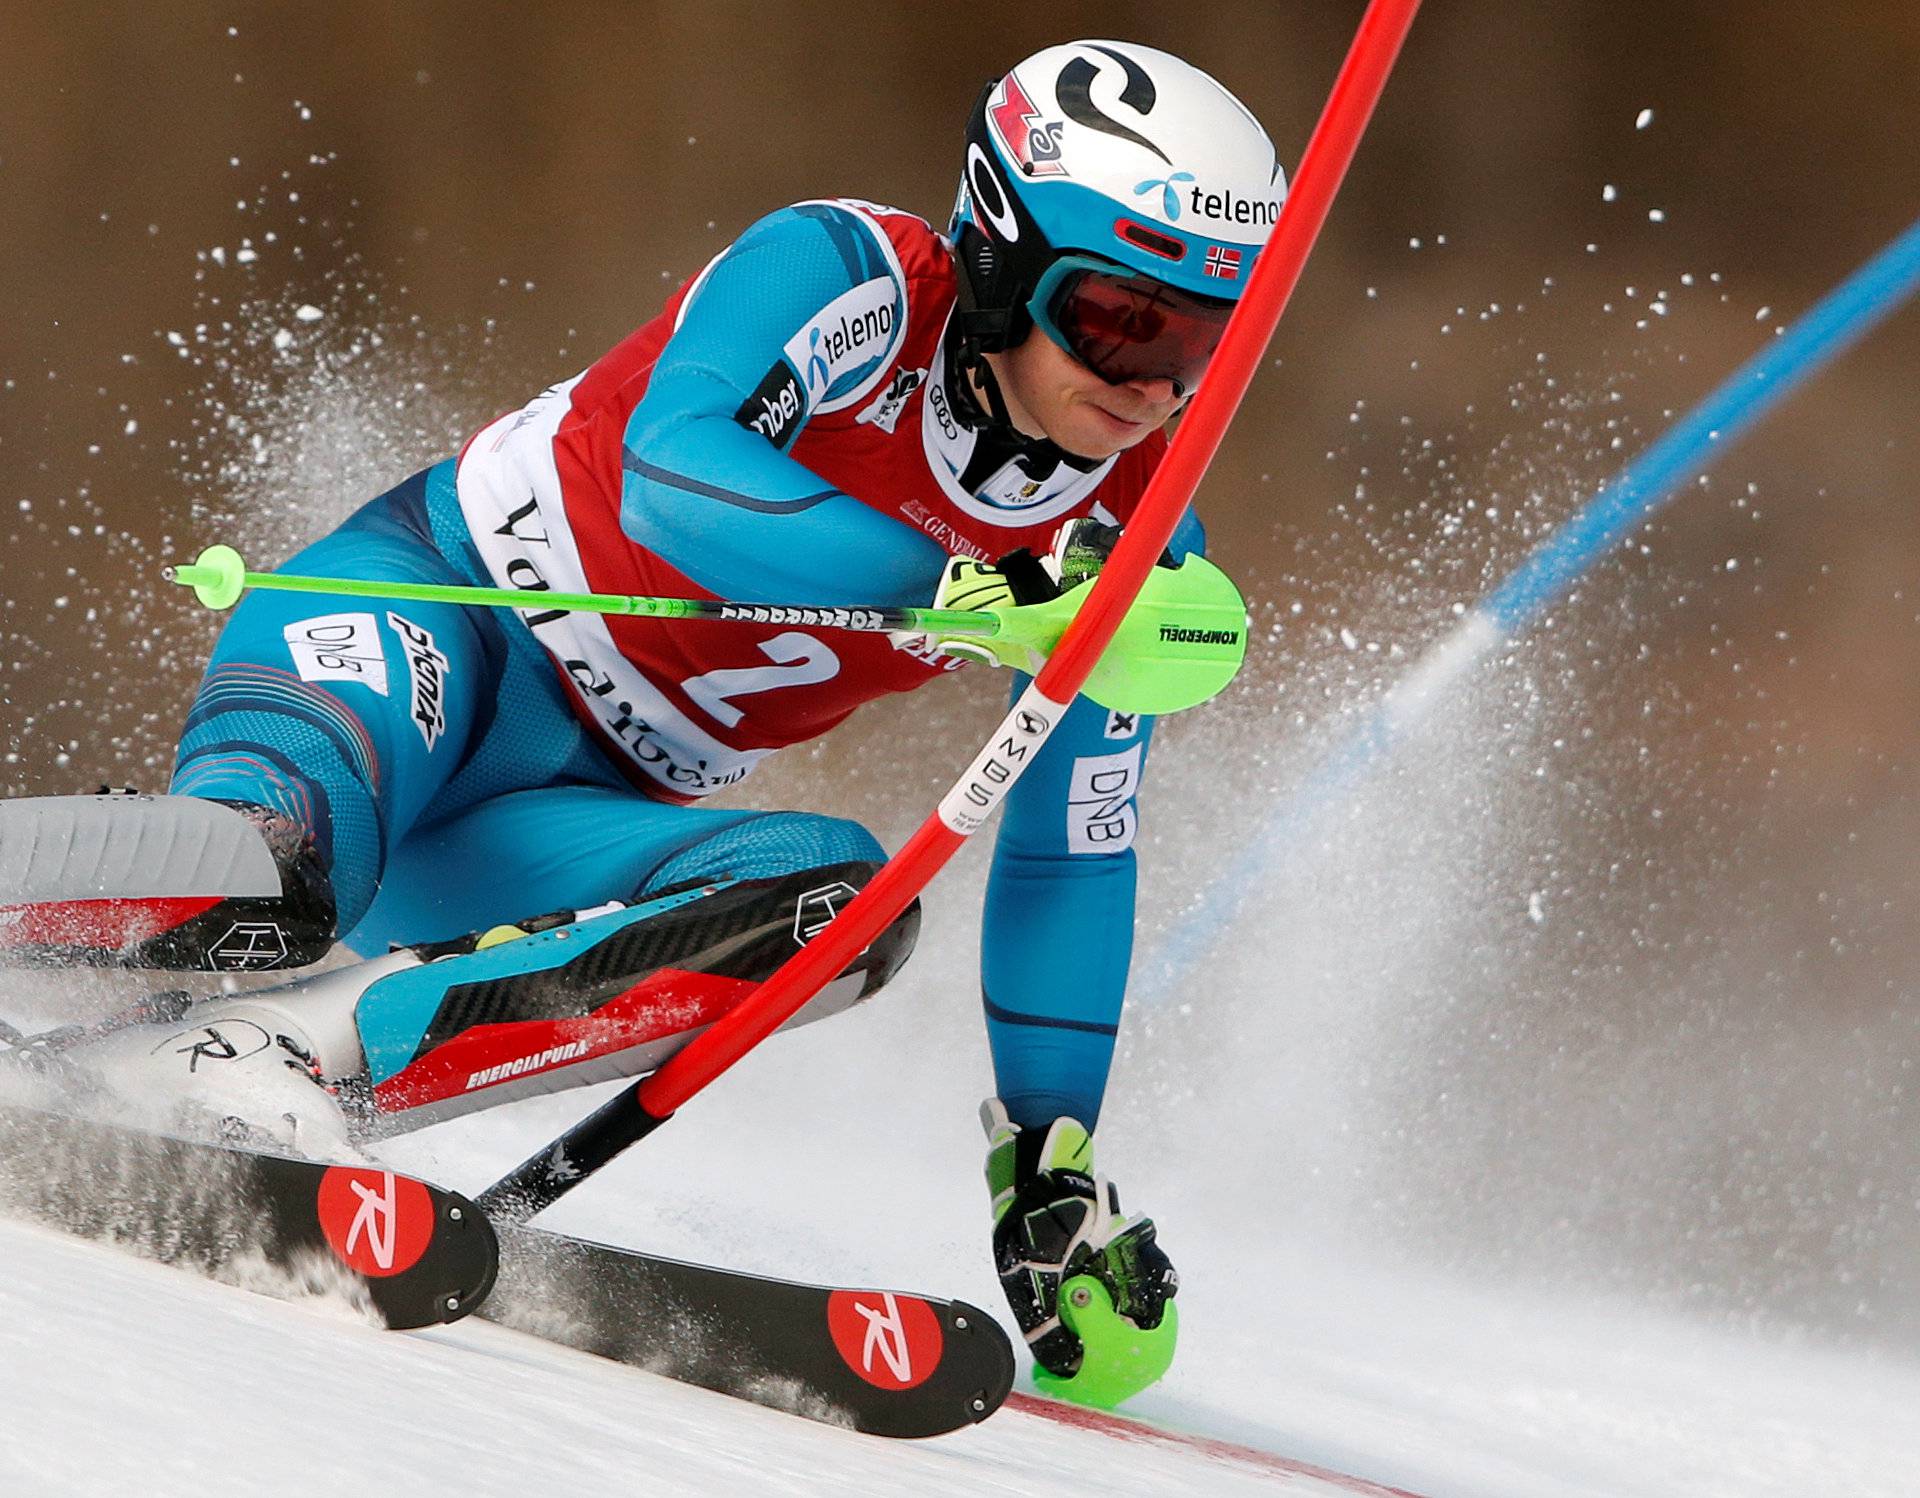 Alpine Skiing - FIS Alpine Skiing World Cup - Men's Slalom